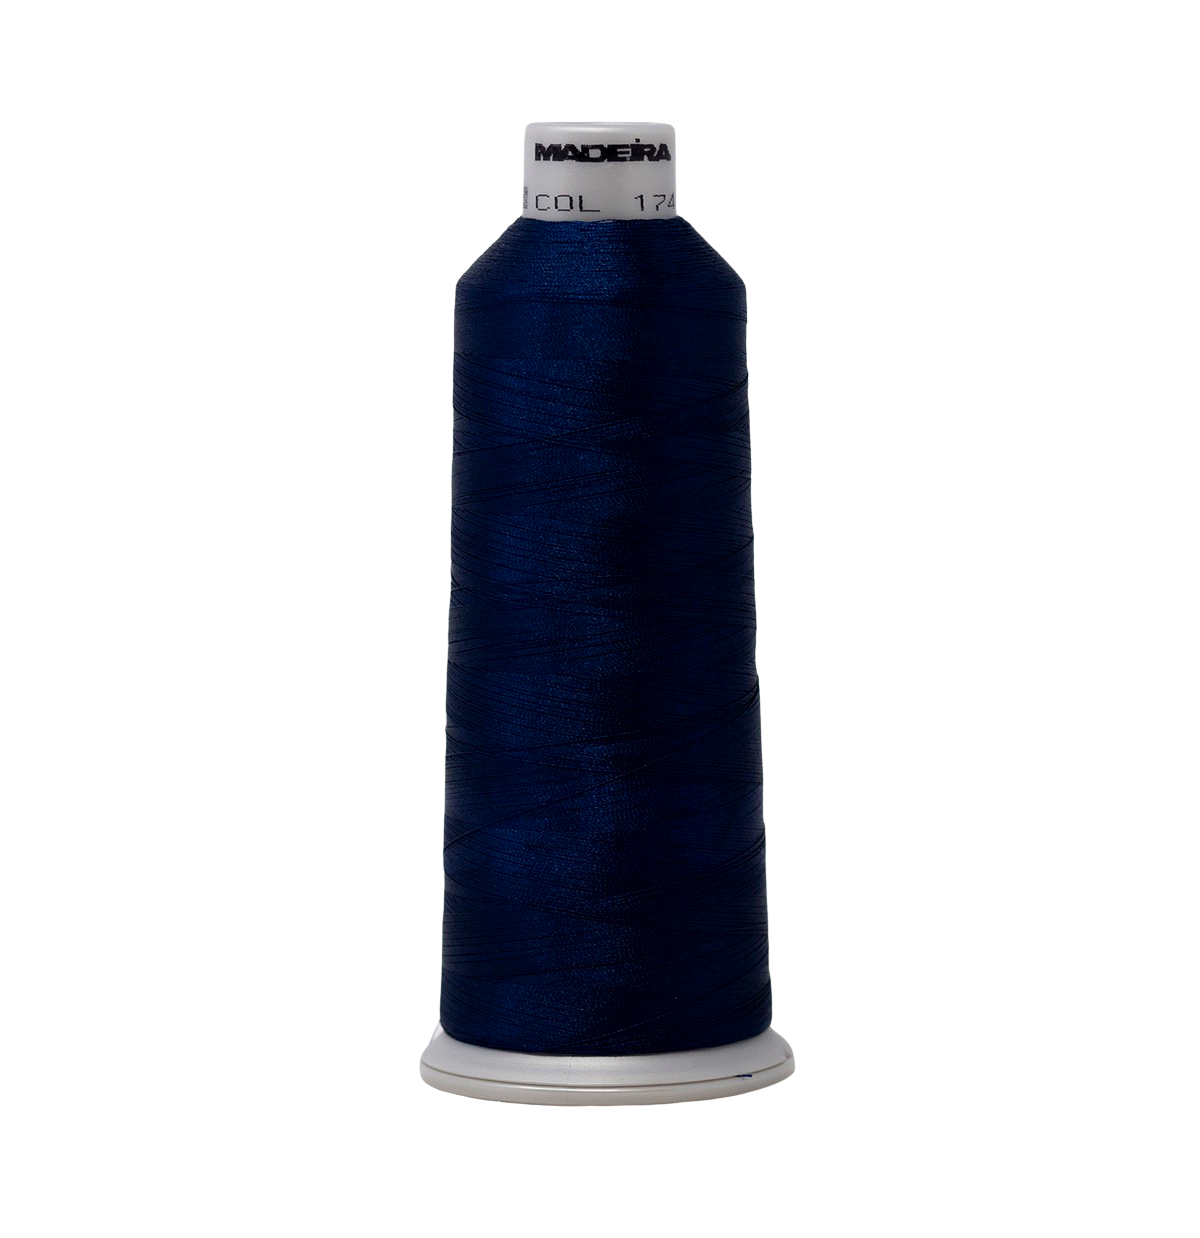 Blue Ink 1742  #40 Weight Madeira Polyneon Thread